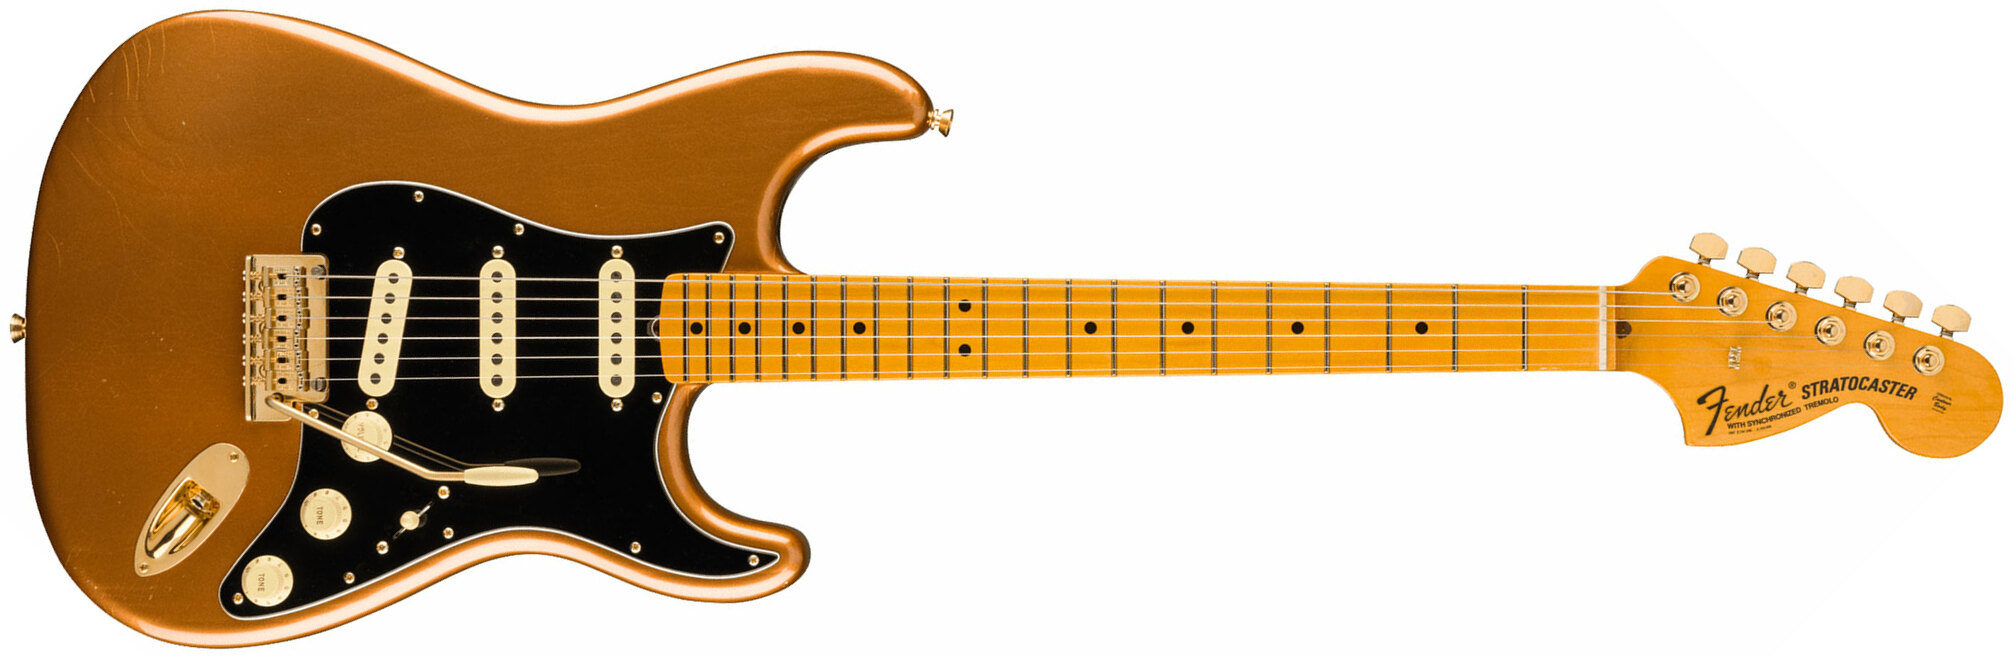 Fender Bruno Mars Strat Usa Signature 3s Trem Mn - Mars Mocha - Signature-E-Gitarre - Main picture